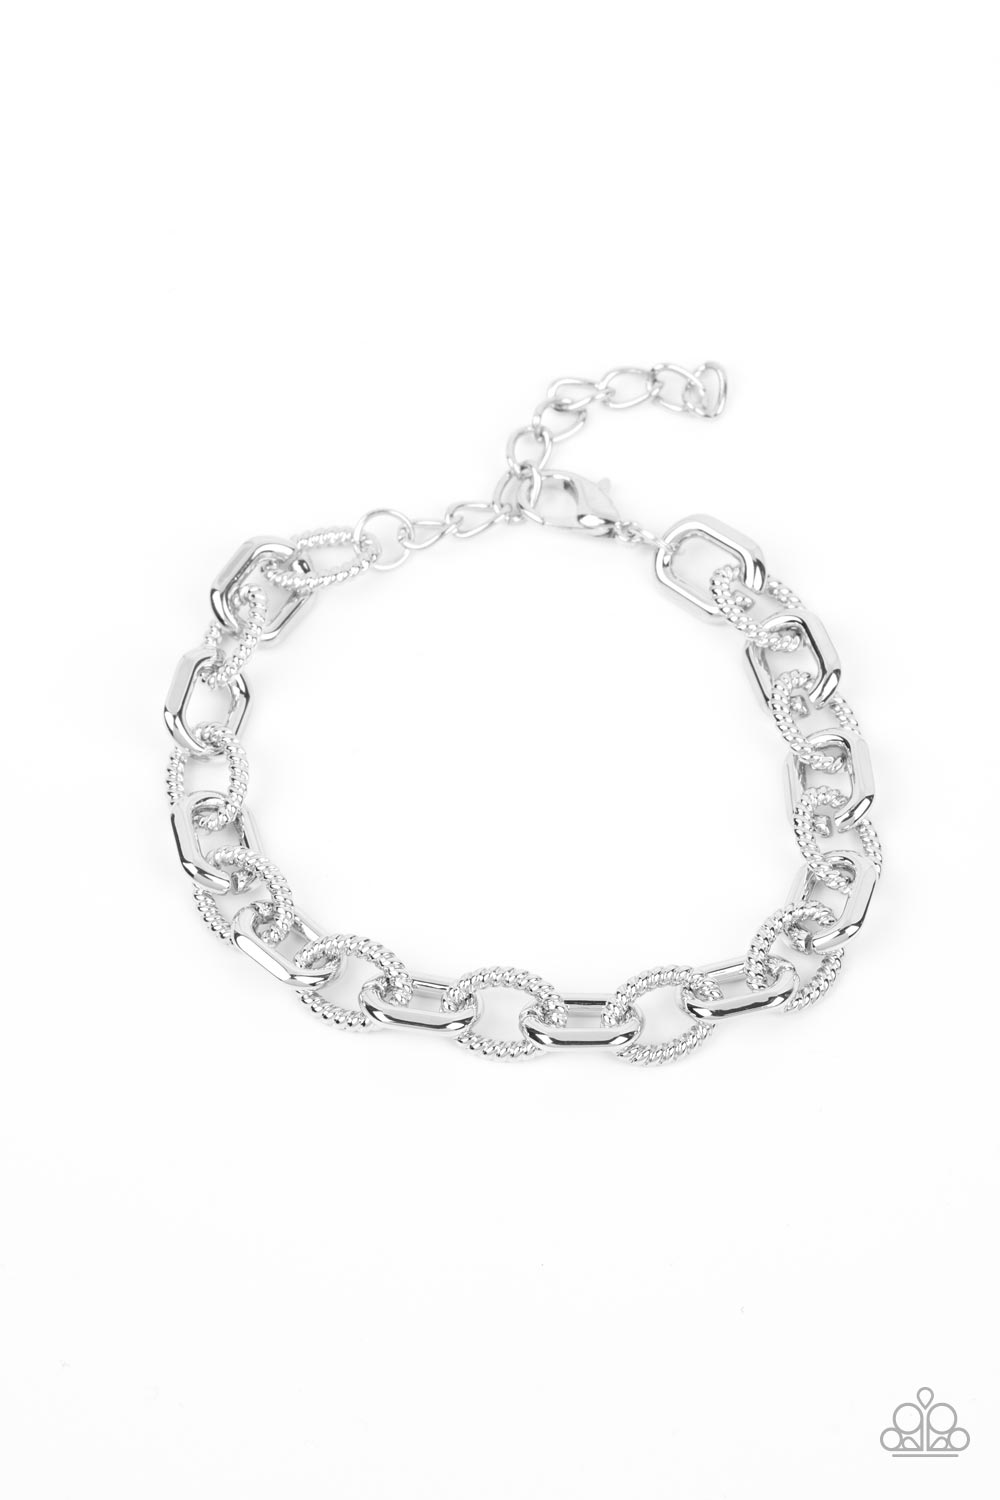 Paparazzi Accessories: Cargo Couture - Silver Bracelet